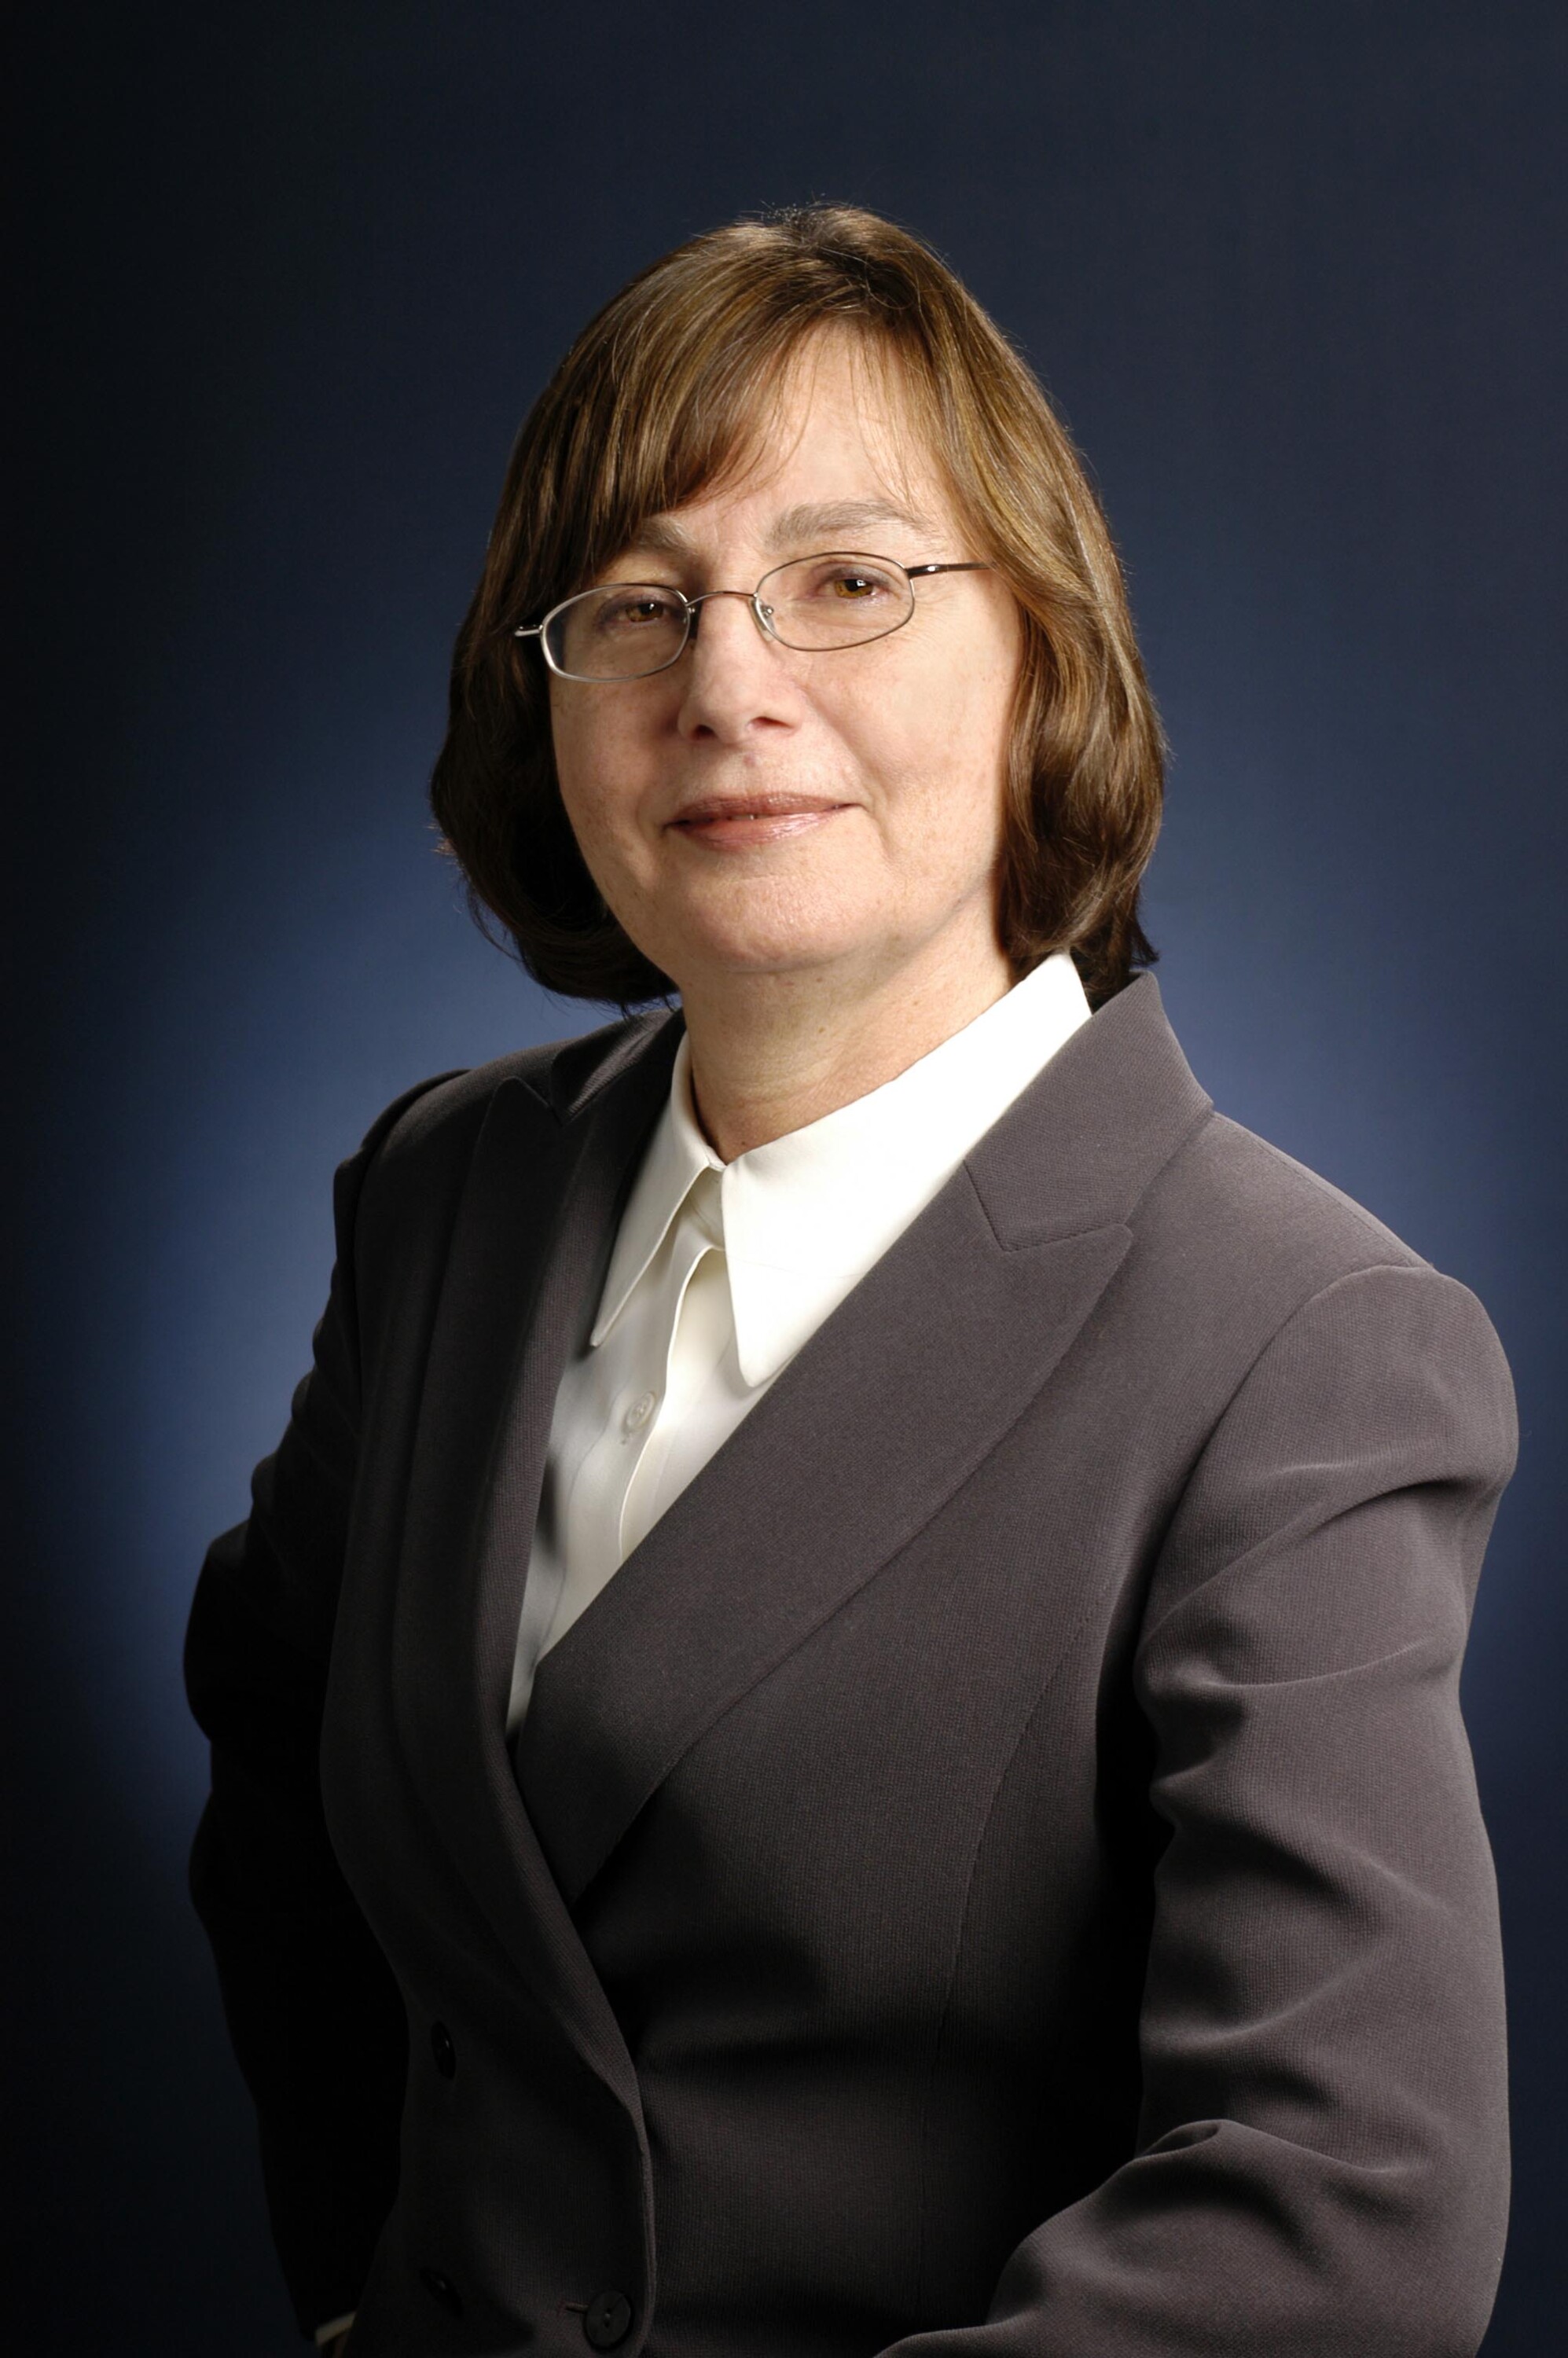 Laura Wallenstein in 2005